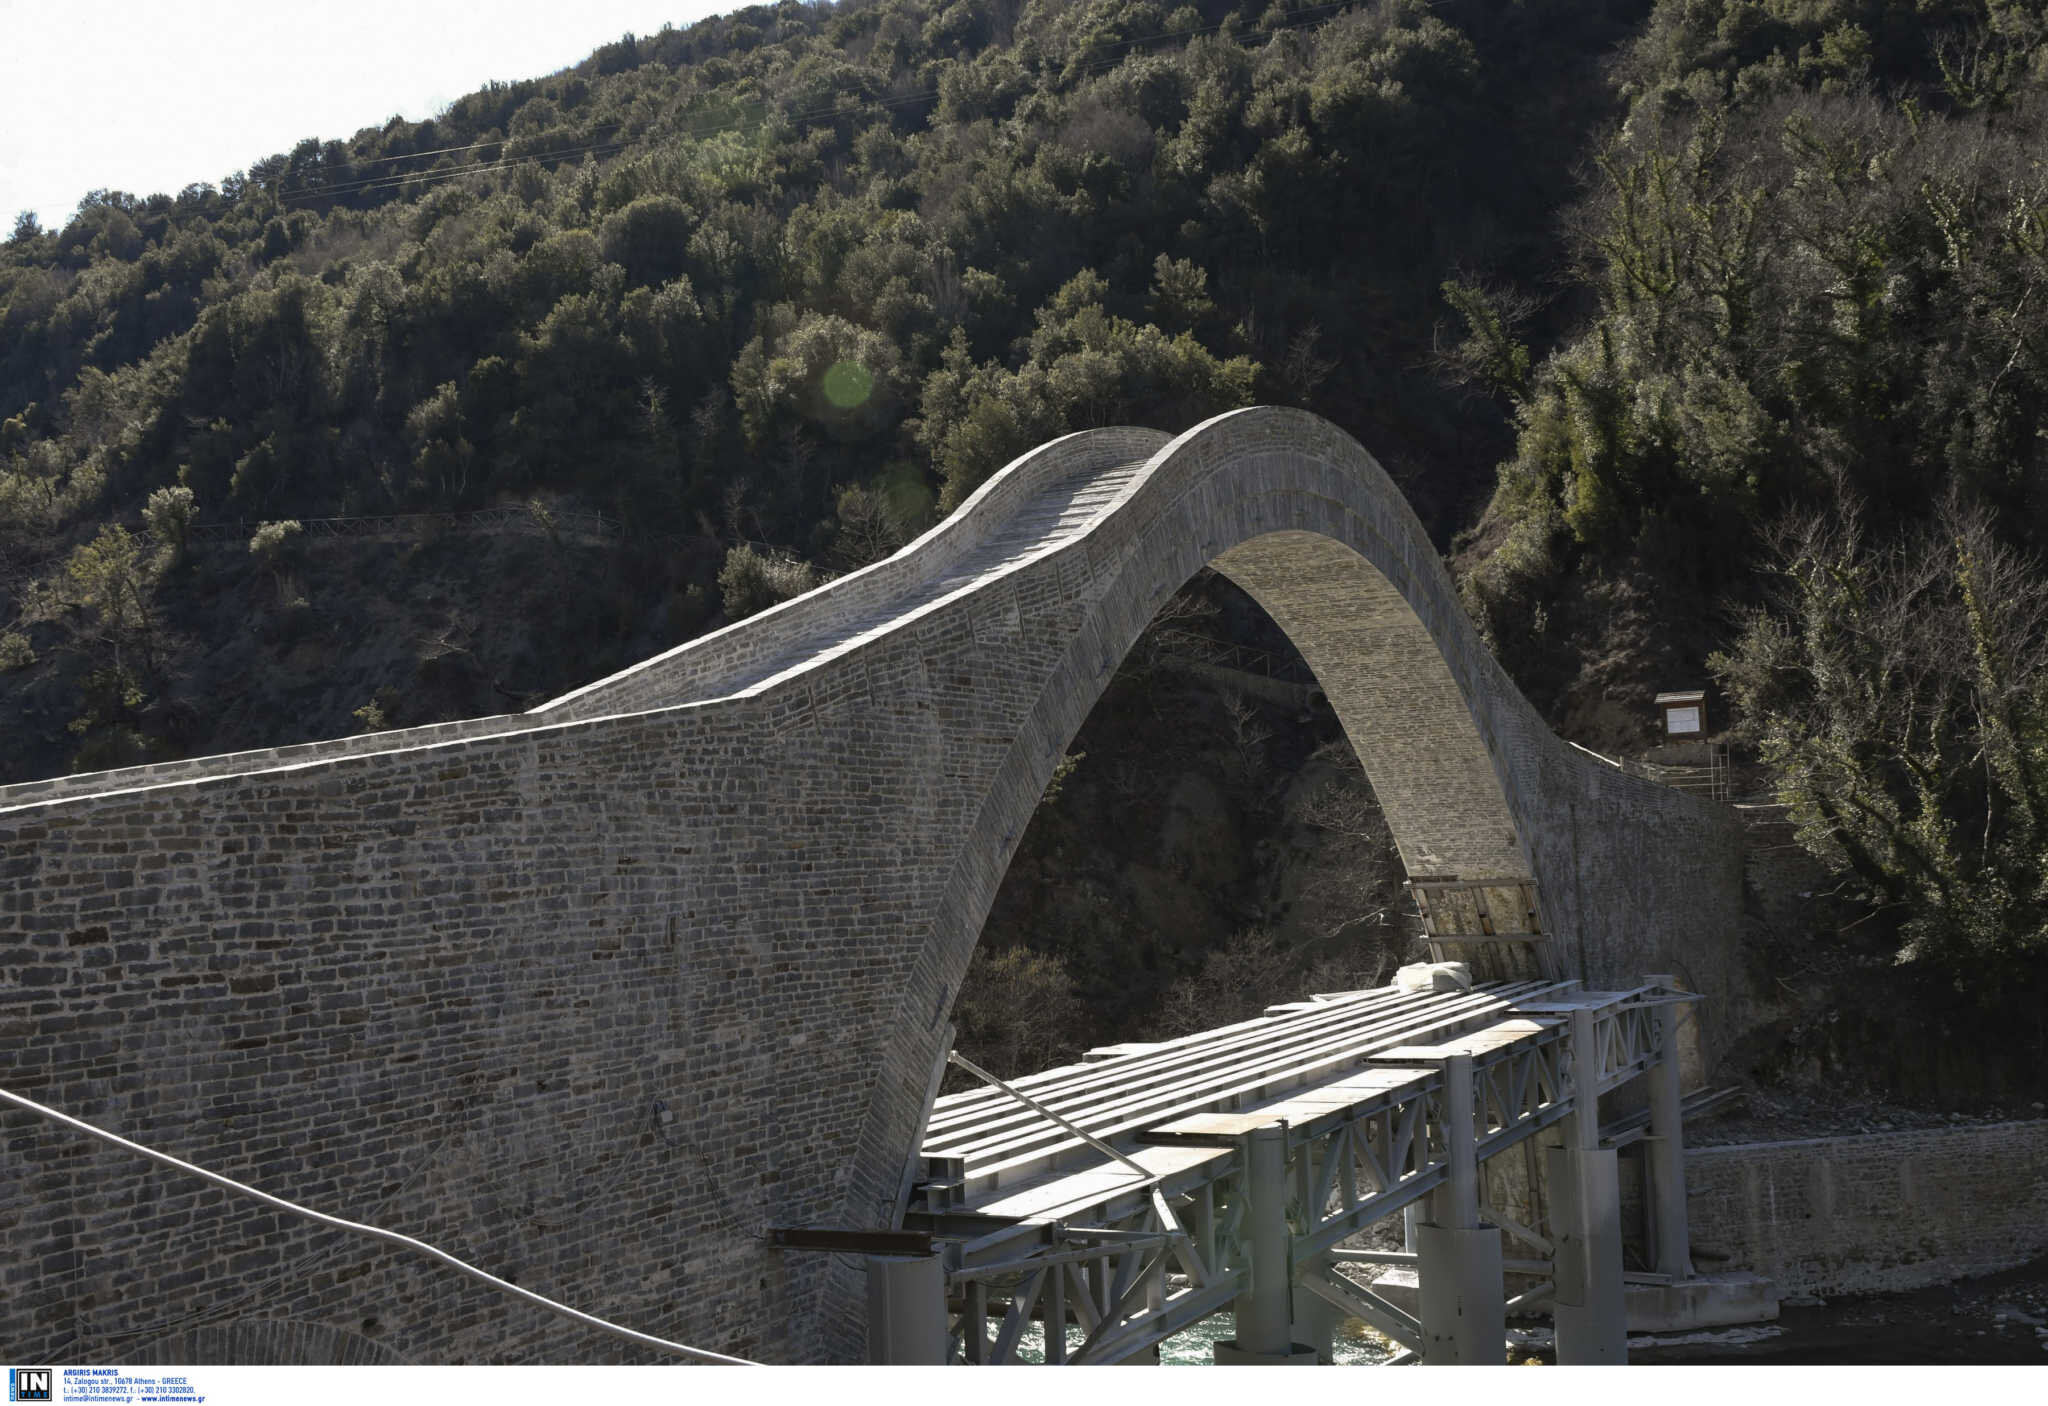 More information about "Ήπειρος: Αποκαλυπτήρια για το γεφύρι της Πλάκας! “Έφυγαν” τα μεταλλικά στηρίγματα"